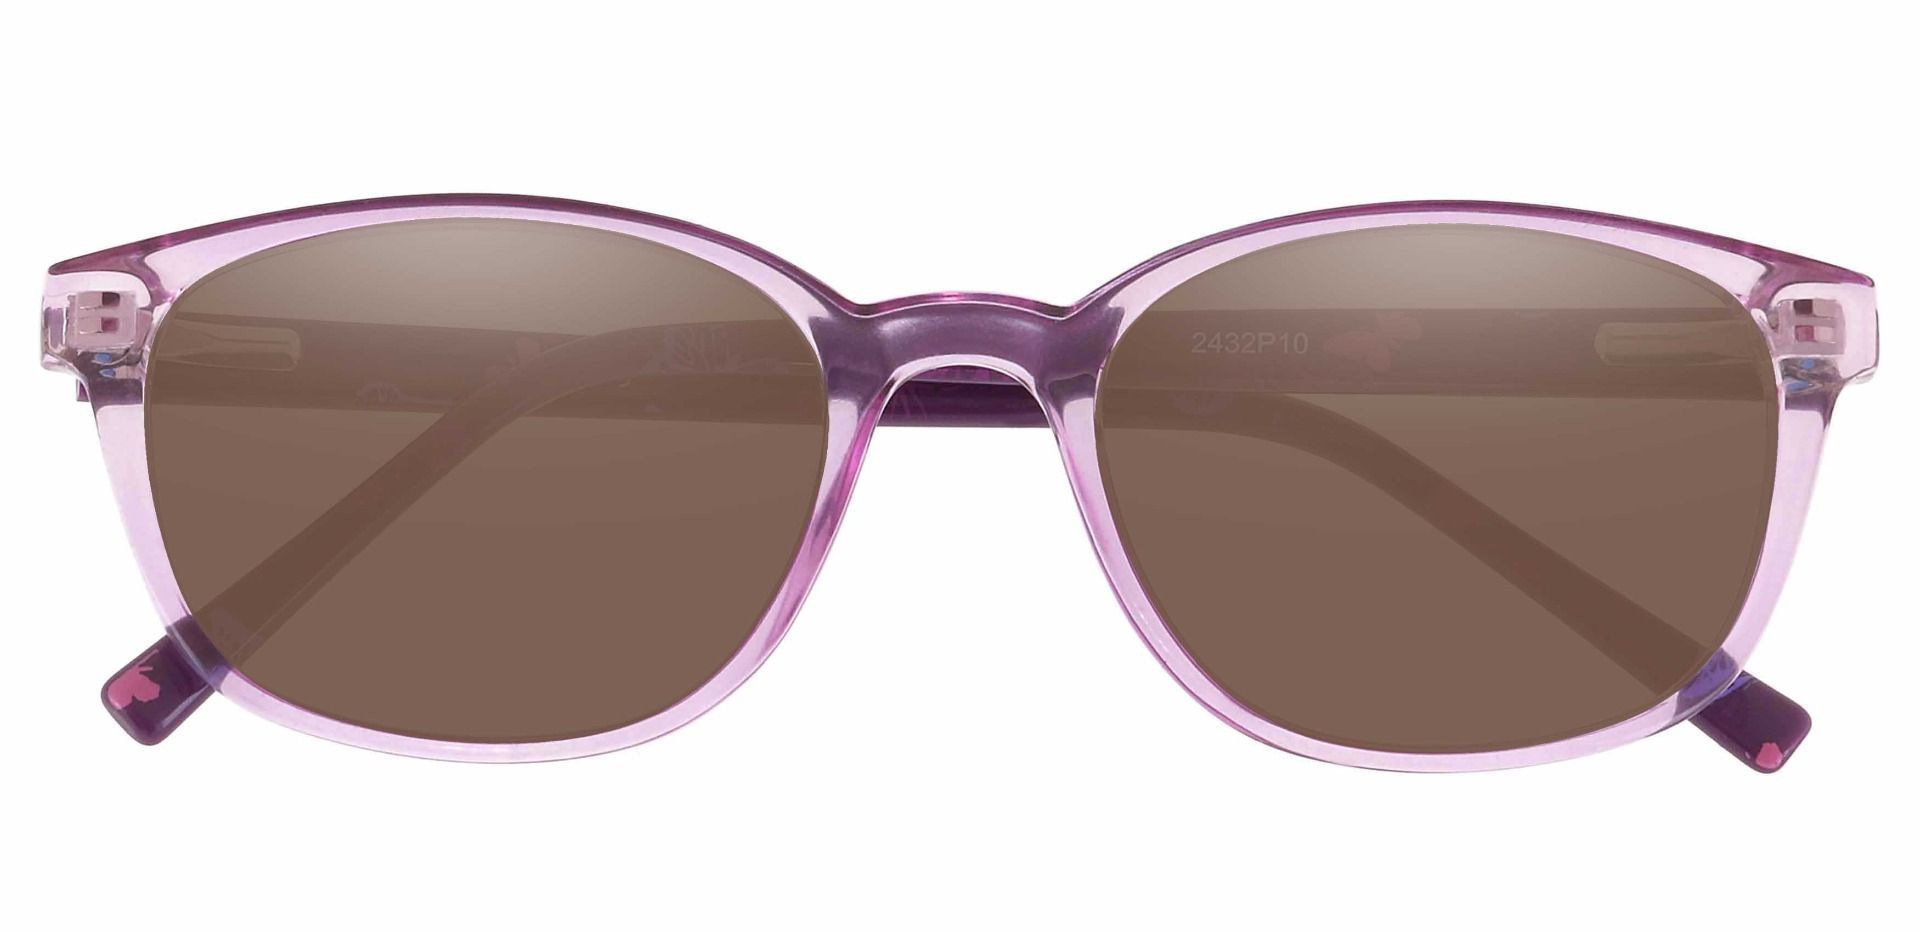 Branson Rectangle Prescription Sunglasses - Purple Frame With Brown Lenses